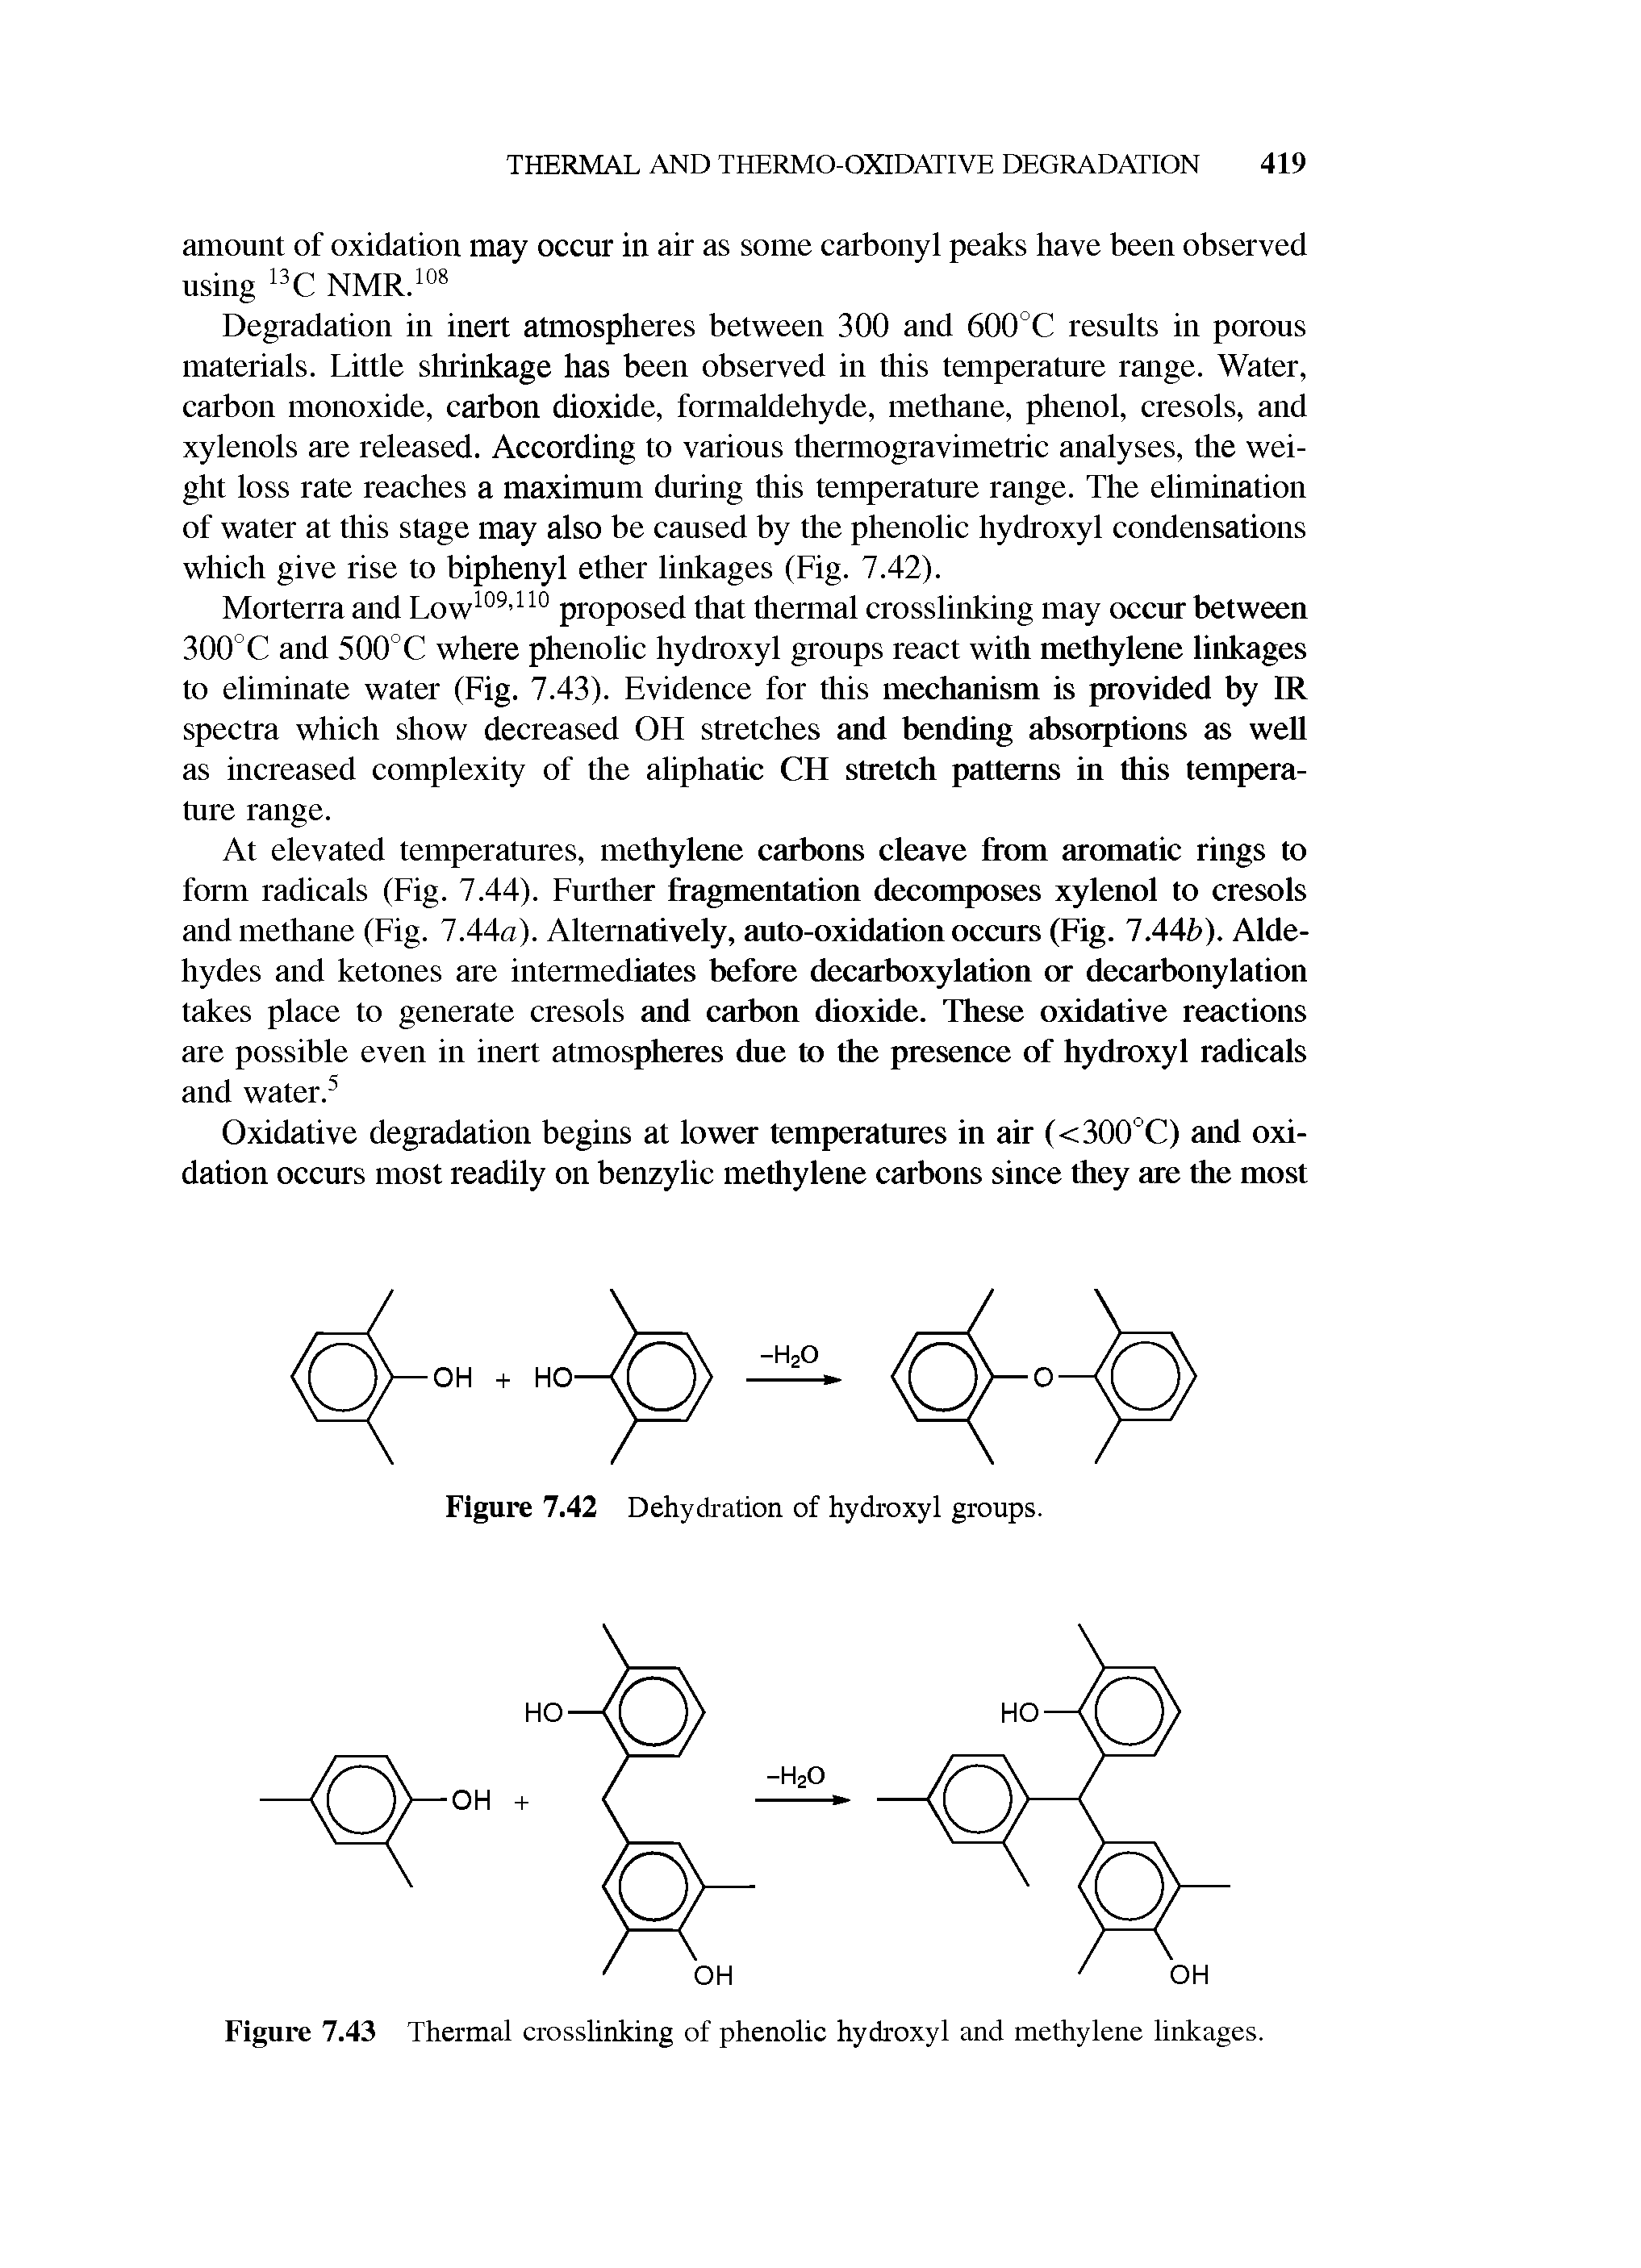 Figure 7.43 Thermal crosslinking of phenolic hydroxyl and methylene linkages.